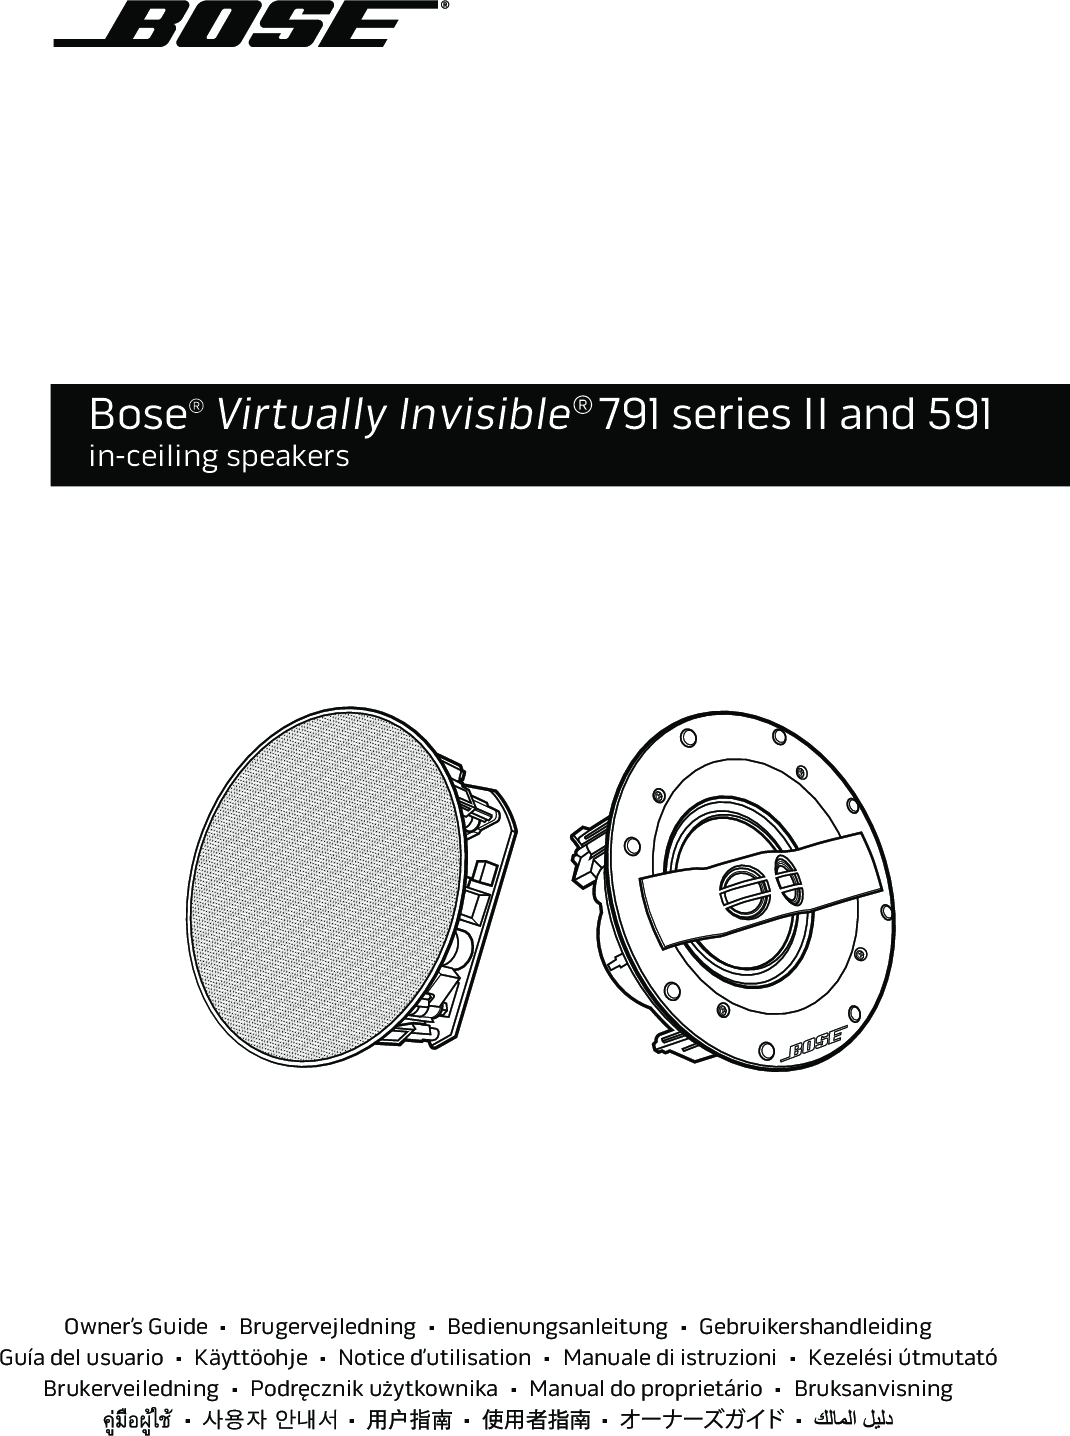 Bose Am750575 02 Og Virtually Invisible 791 591 Mlvo